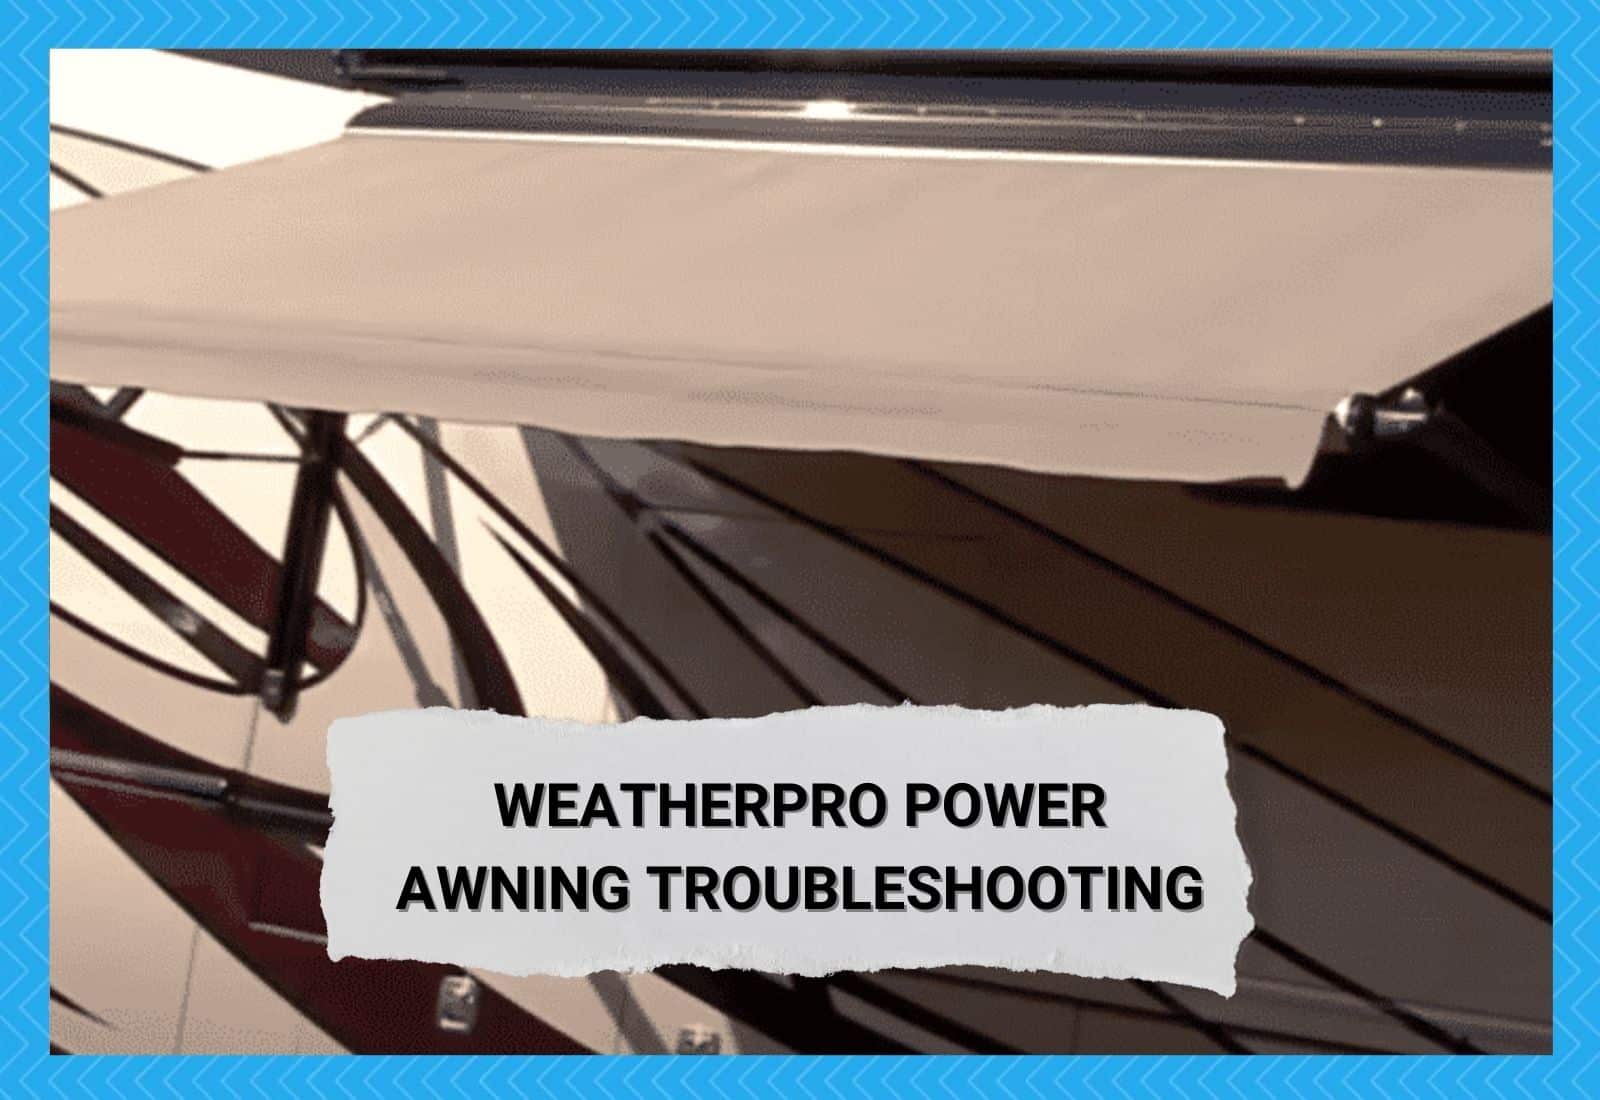 Weatherpro Power Awning Troubleshooting